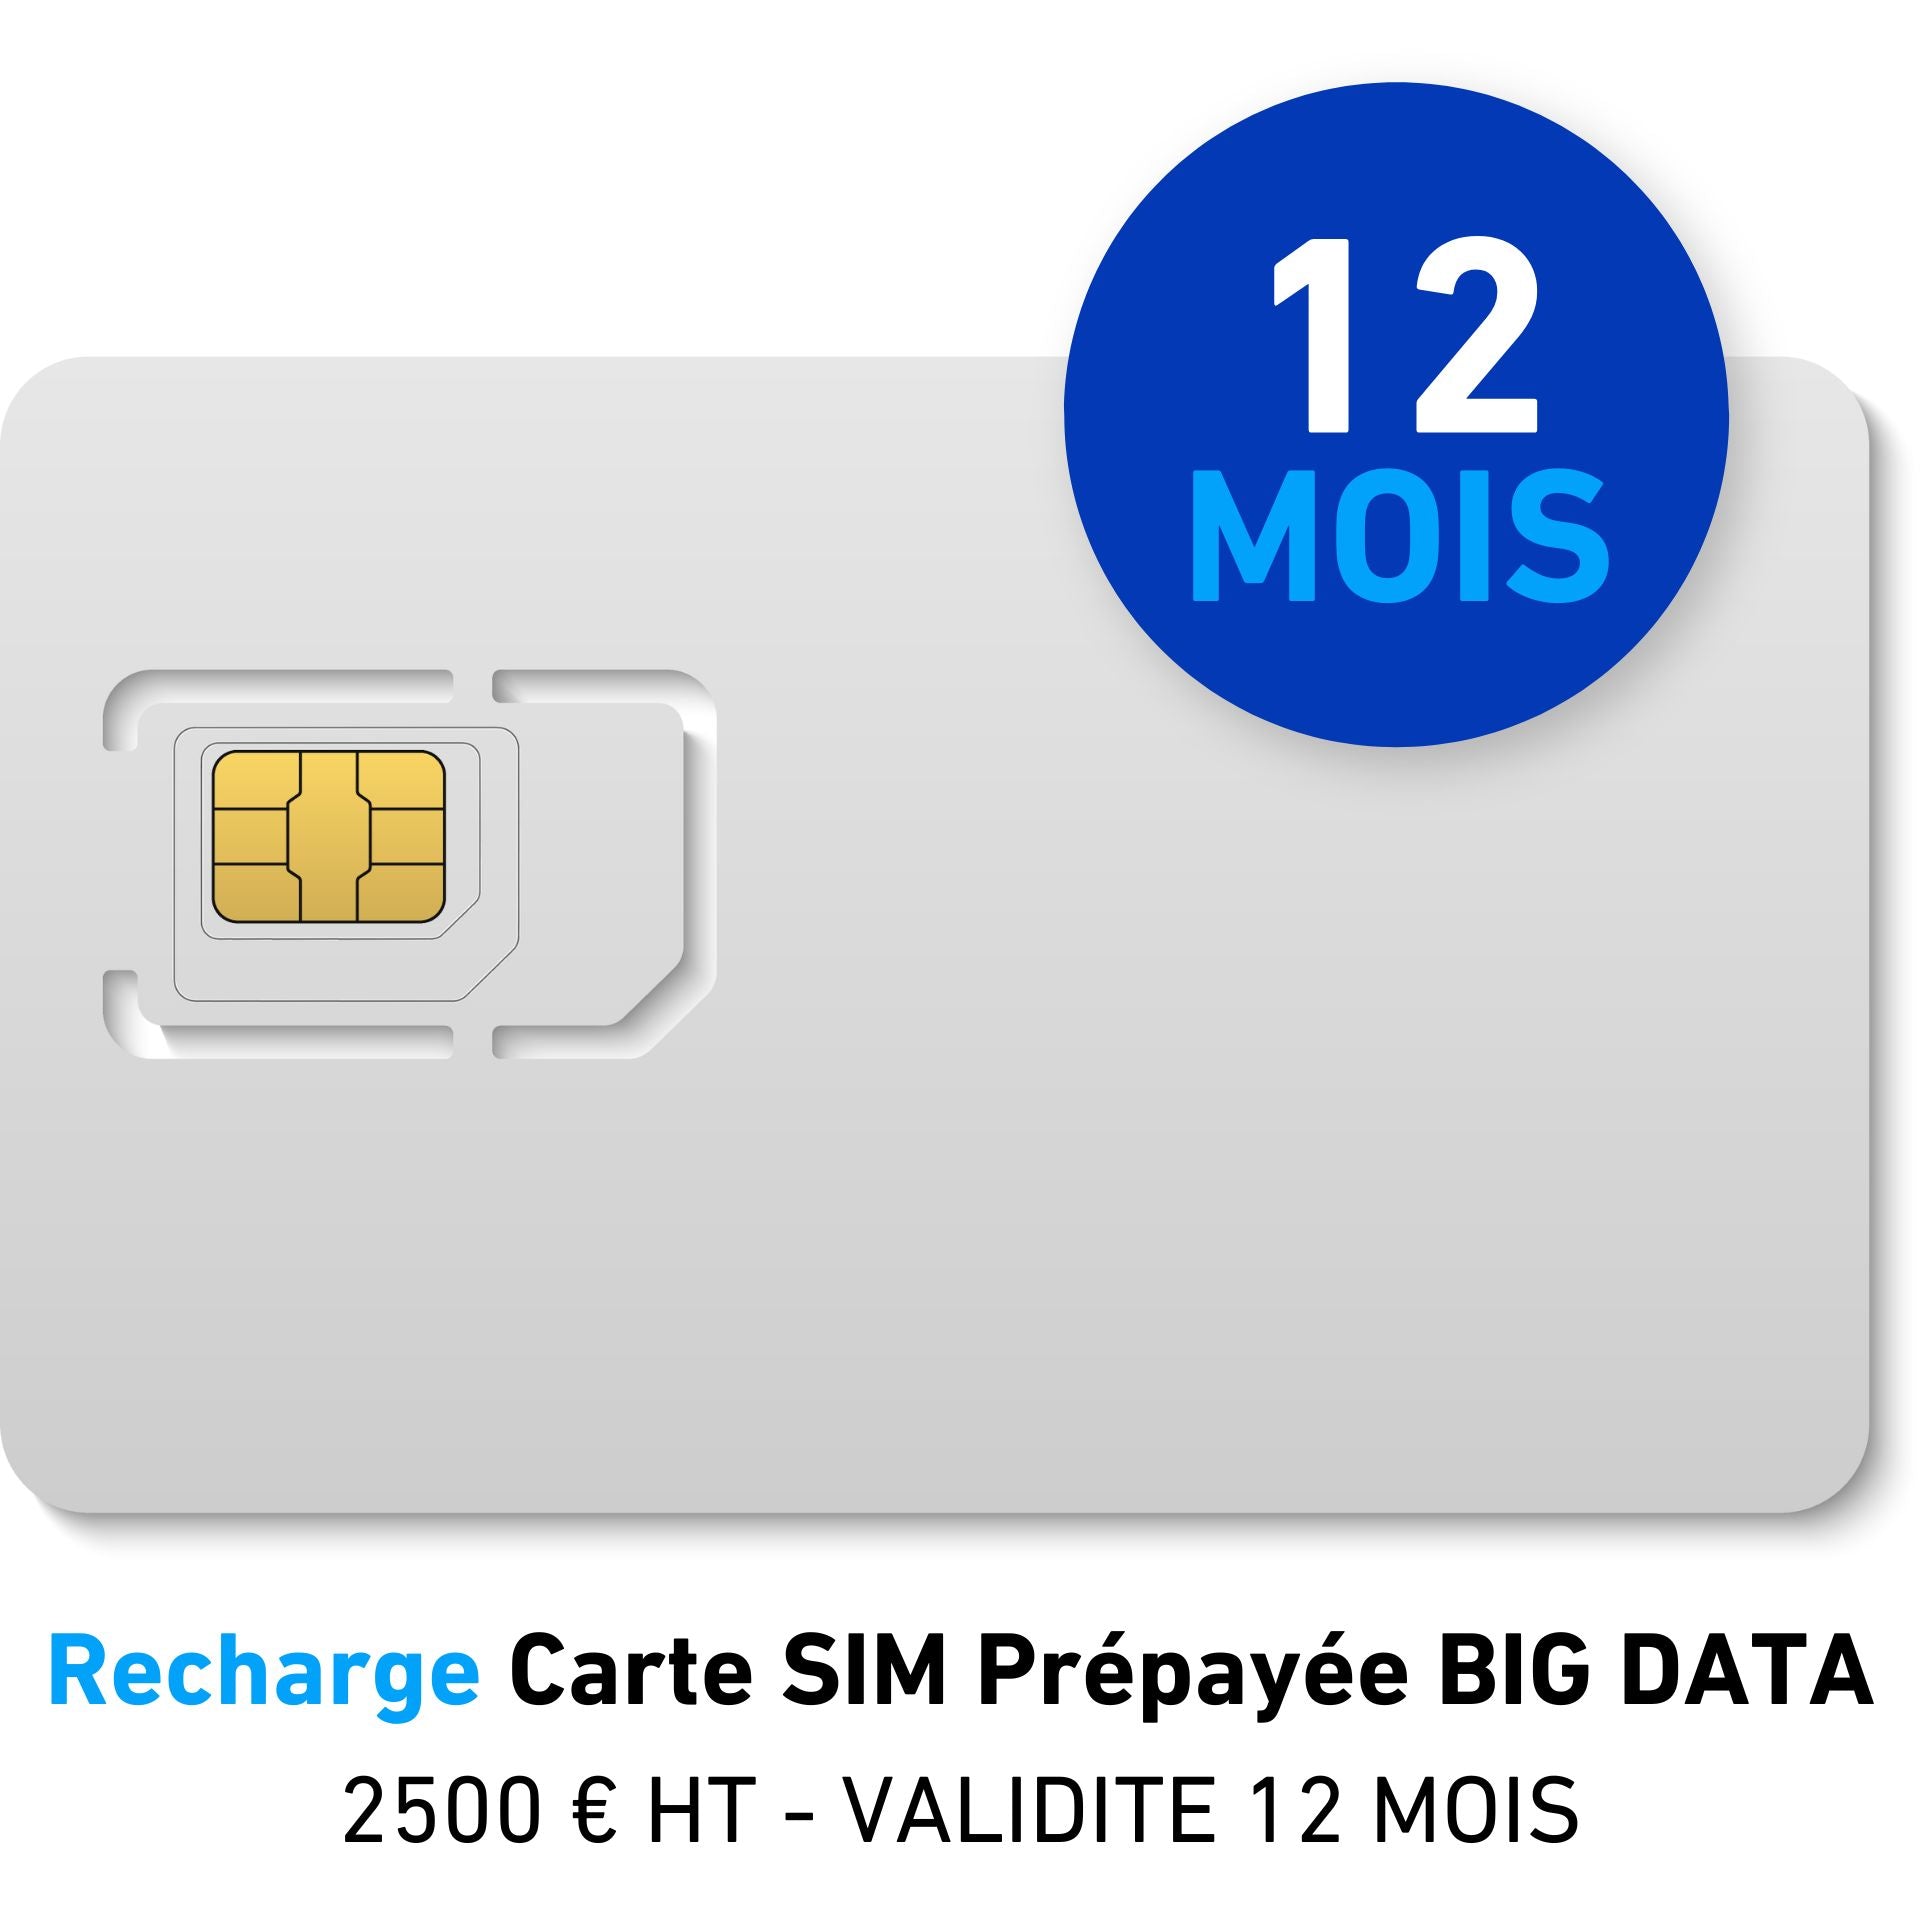 BIG DATA prepaid SIM card refill 2500 € HT - VALIDITY 12 MONTHS